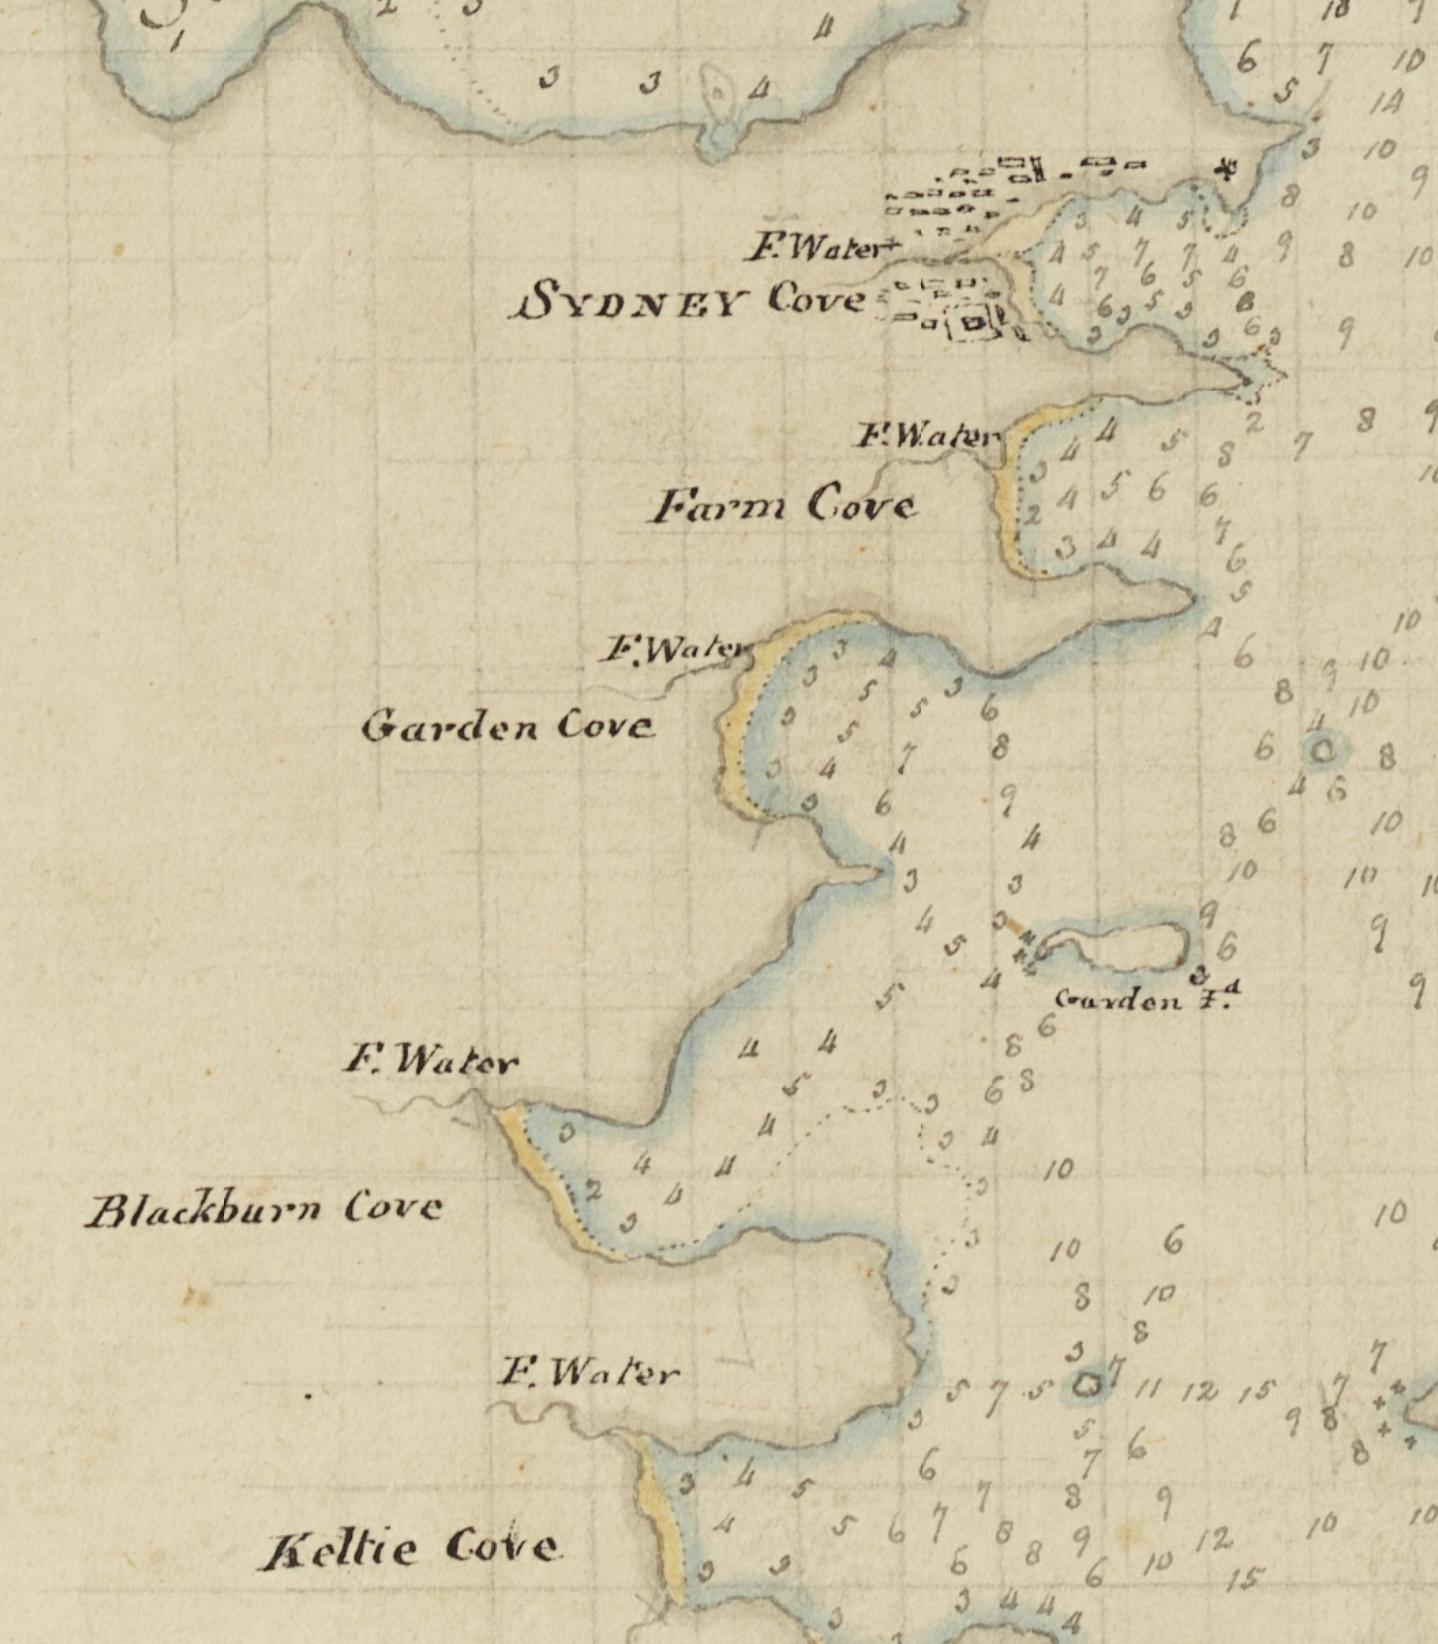 Nautical chart of Port Jackson